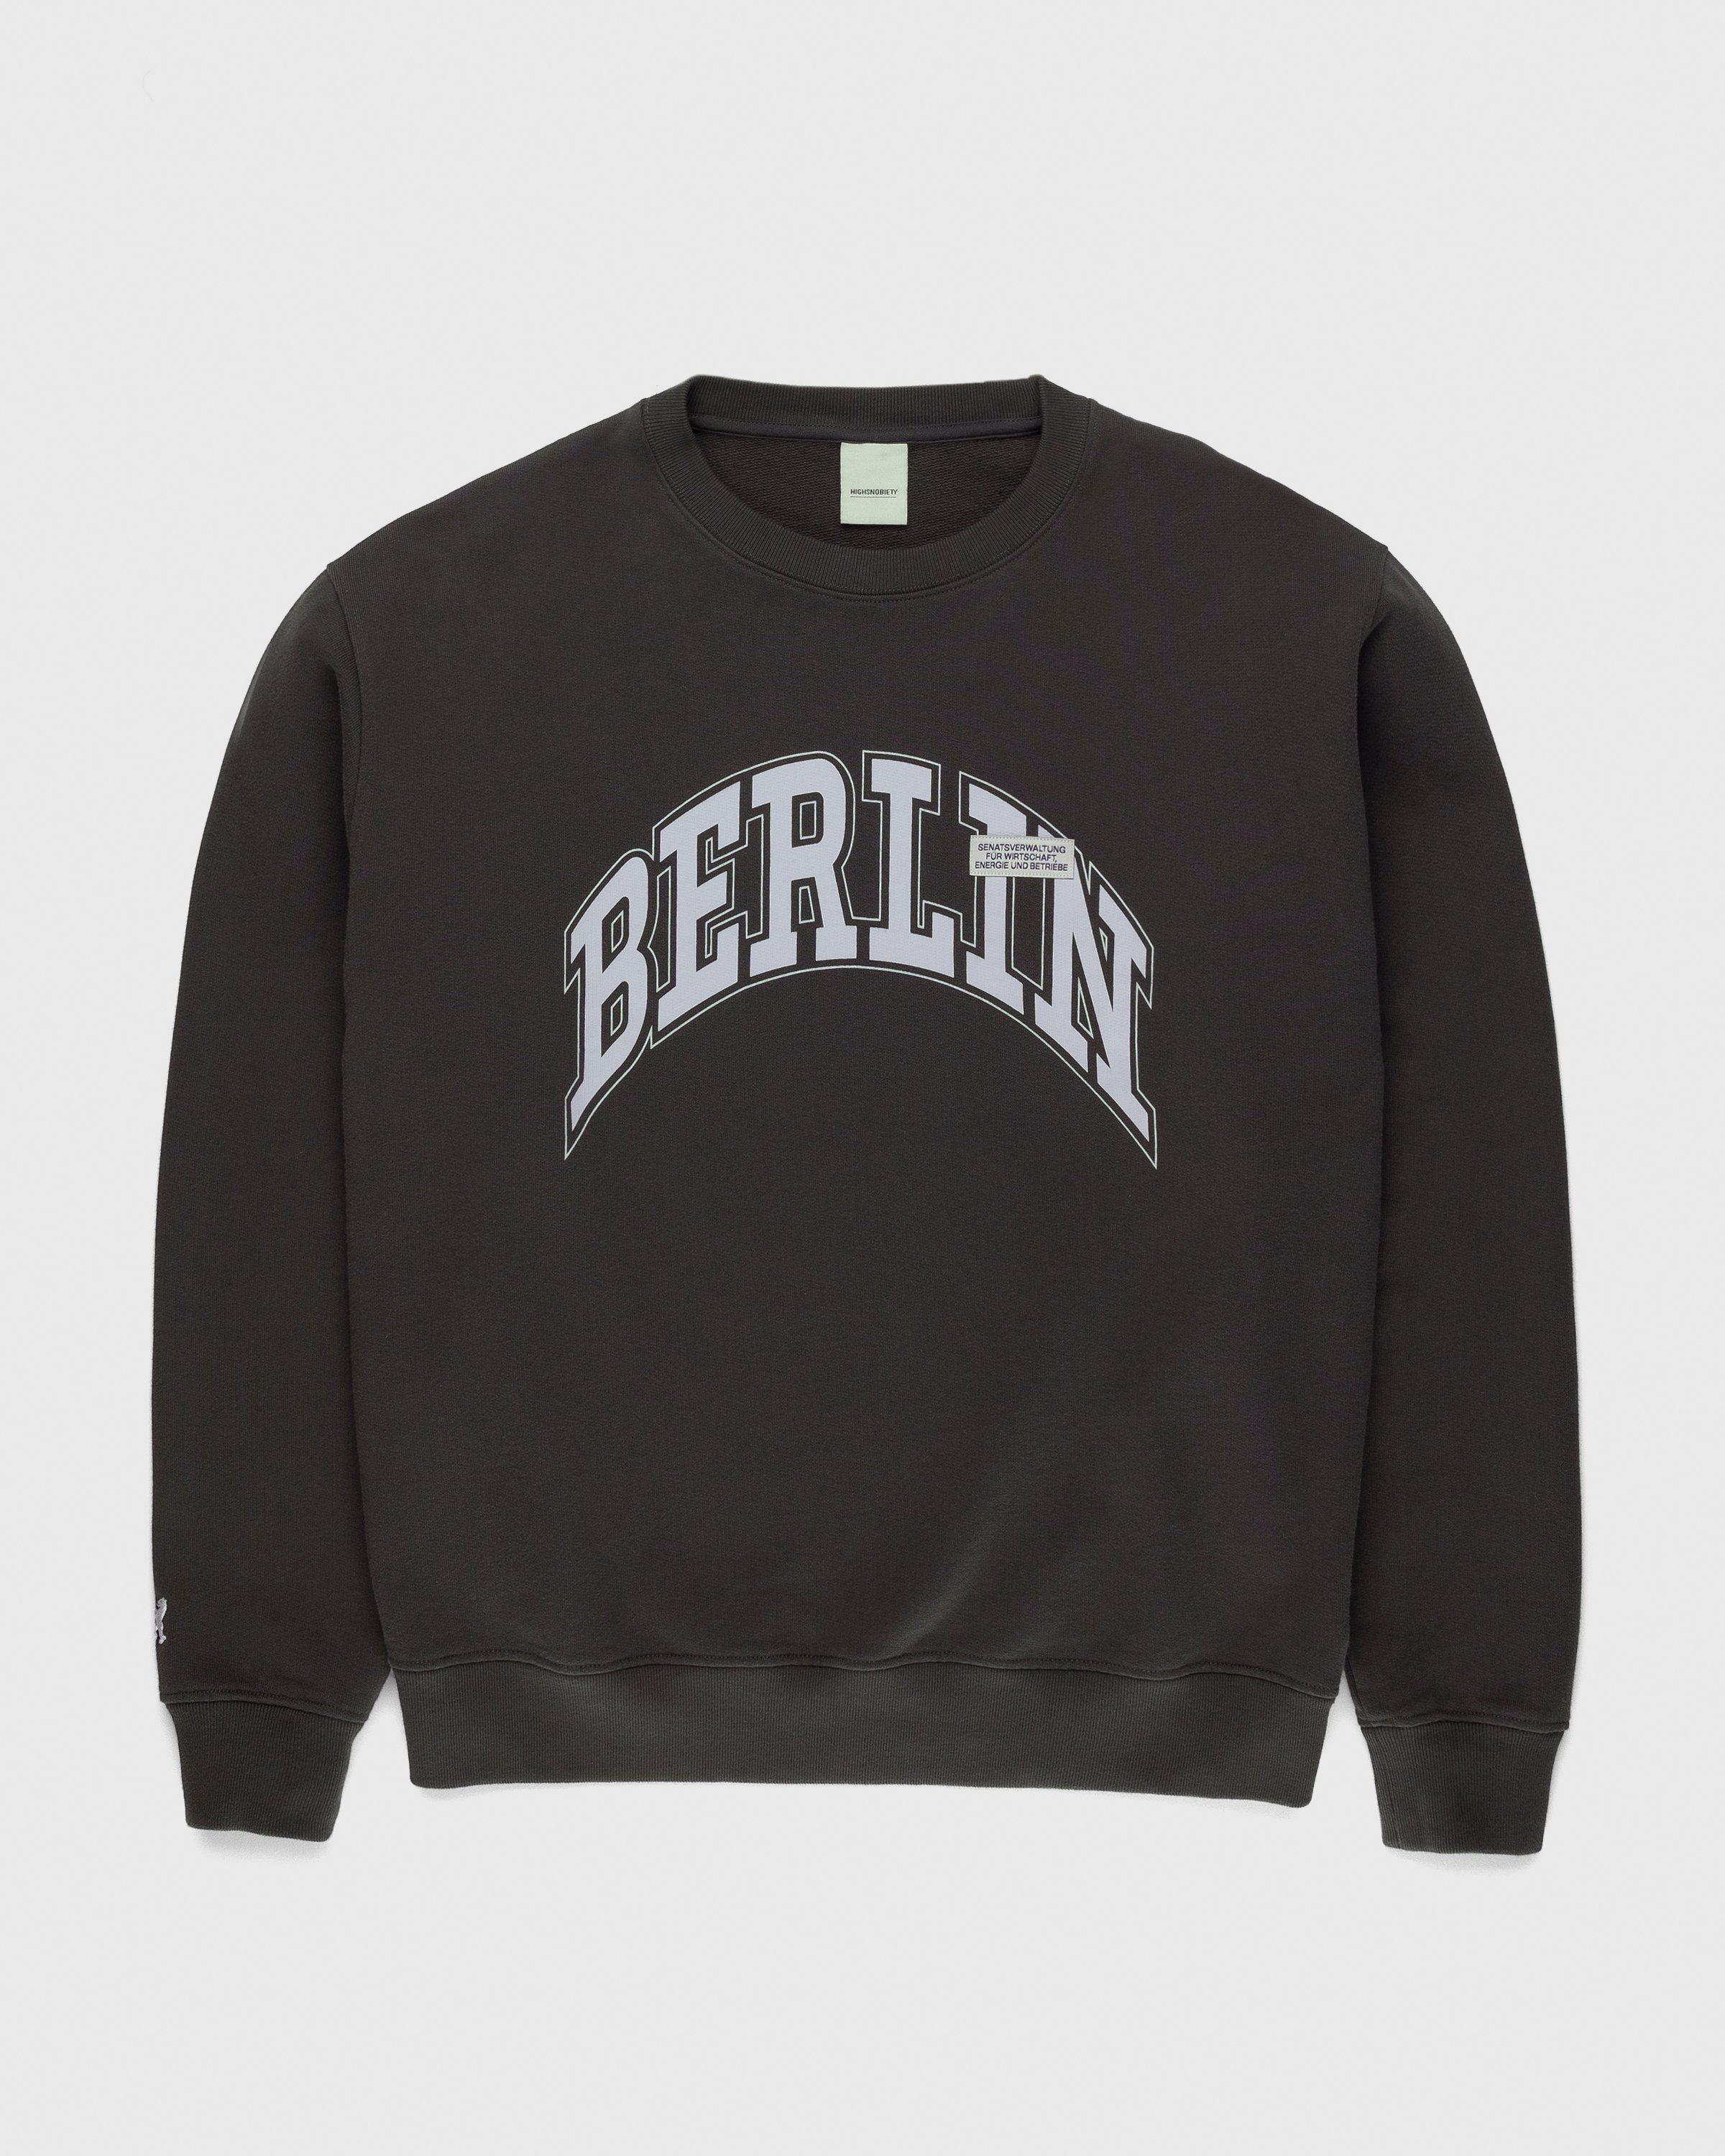 Highsnobiety - BERLIN, BERLIN 3 Crewneck Black - Clothing - Black - Image 1